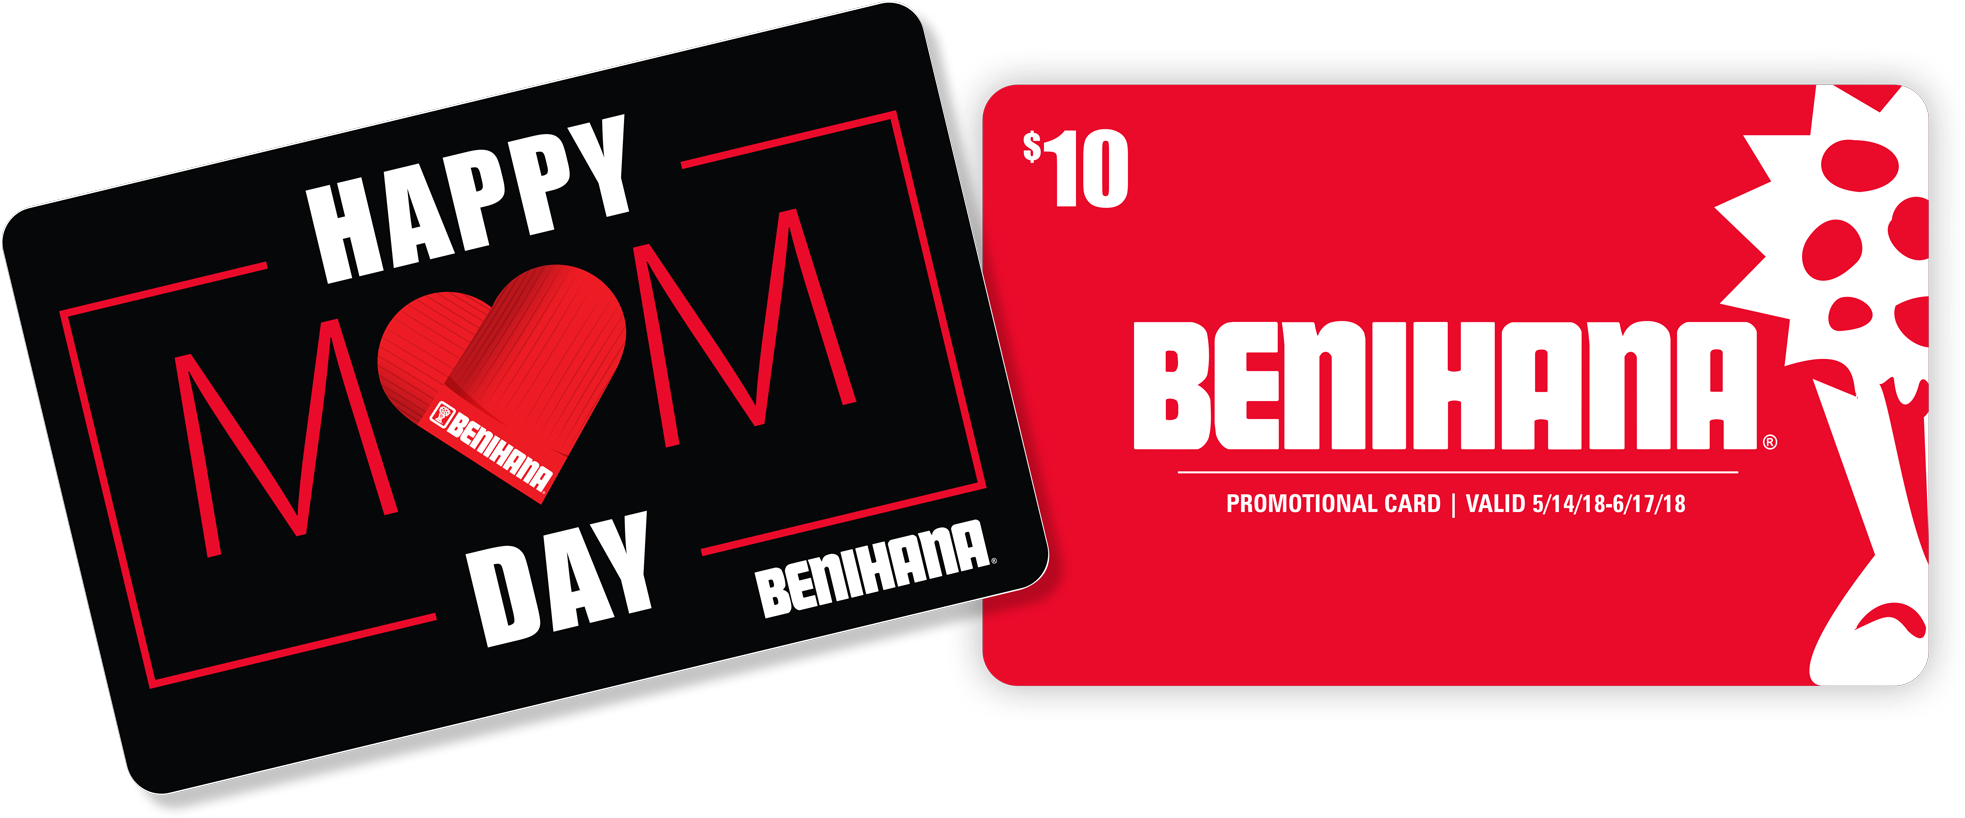 Mothers Day Gift Cards Image 2018 Benihana - Benihana (2000x879), Png Download